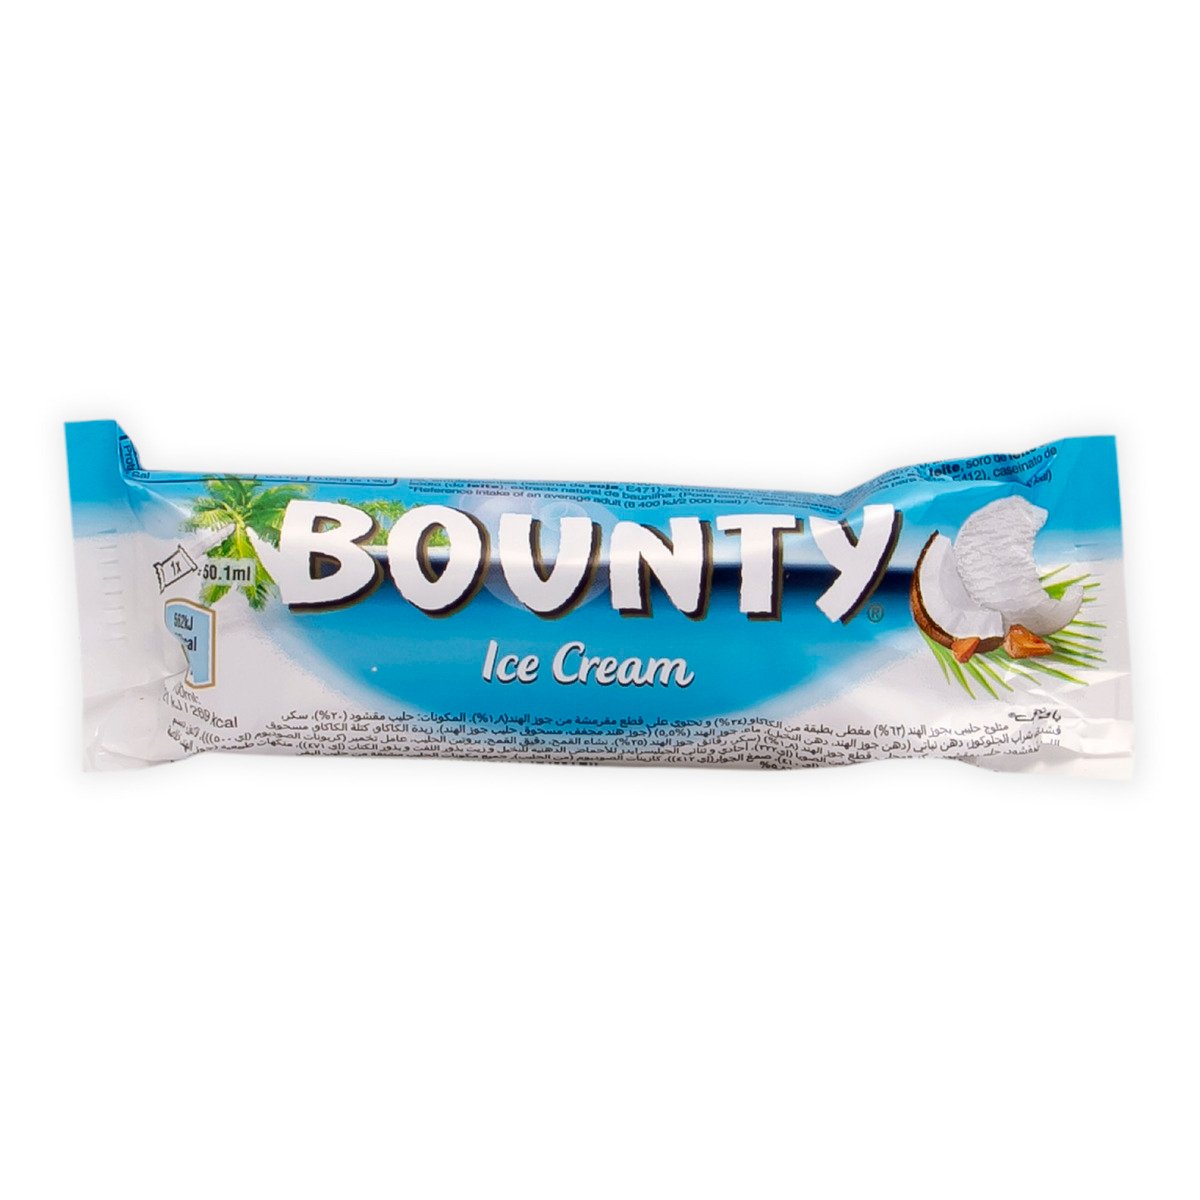 Bounty Ice Cream 39.1 g